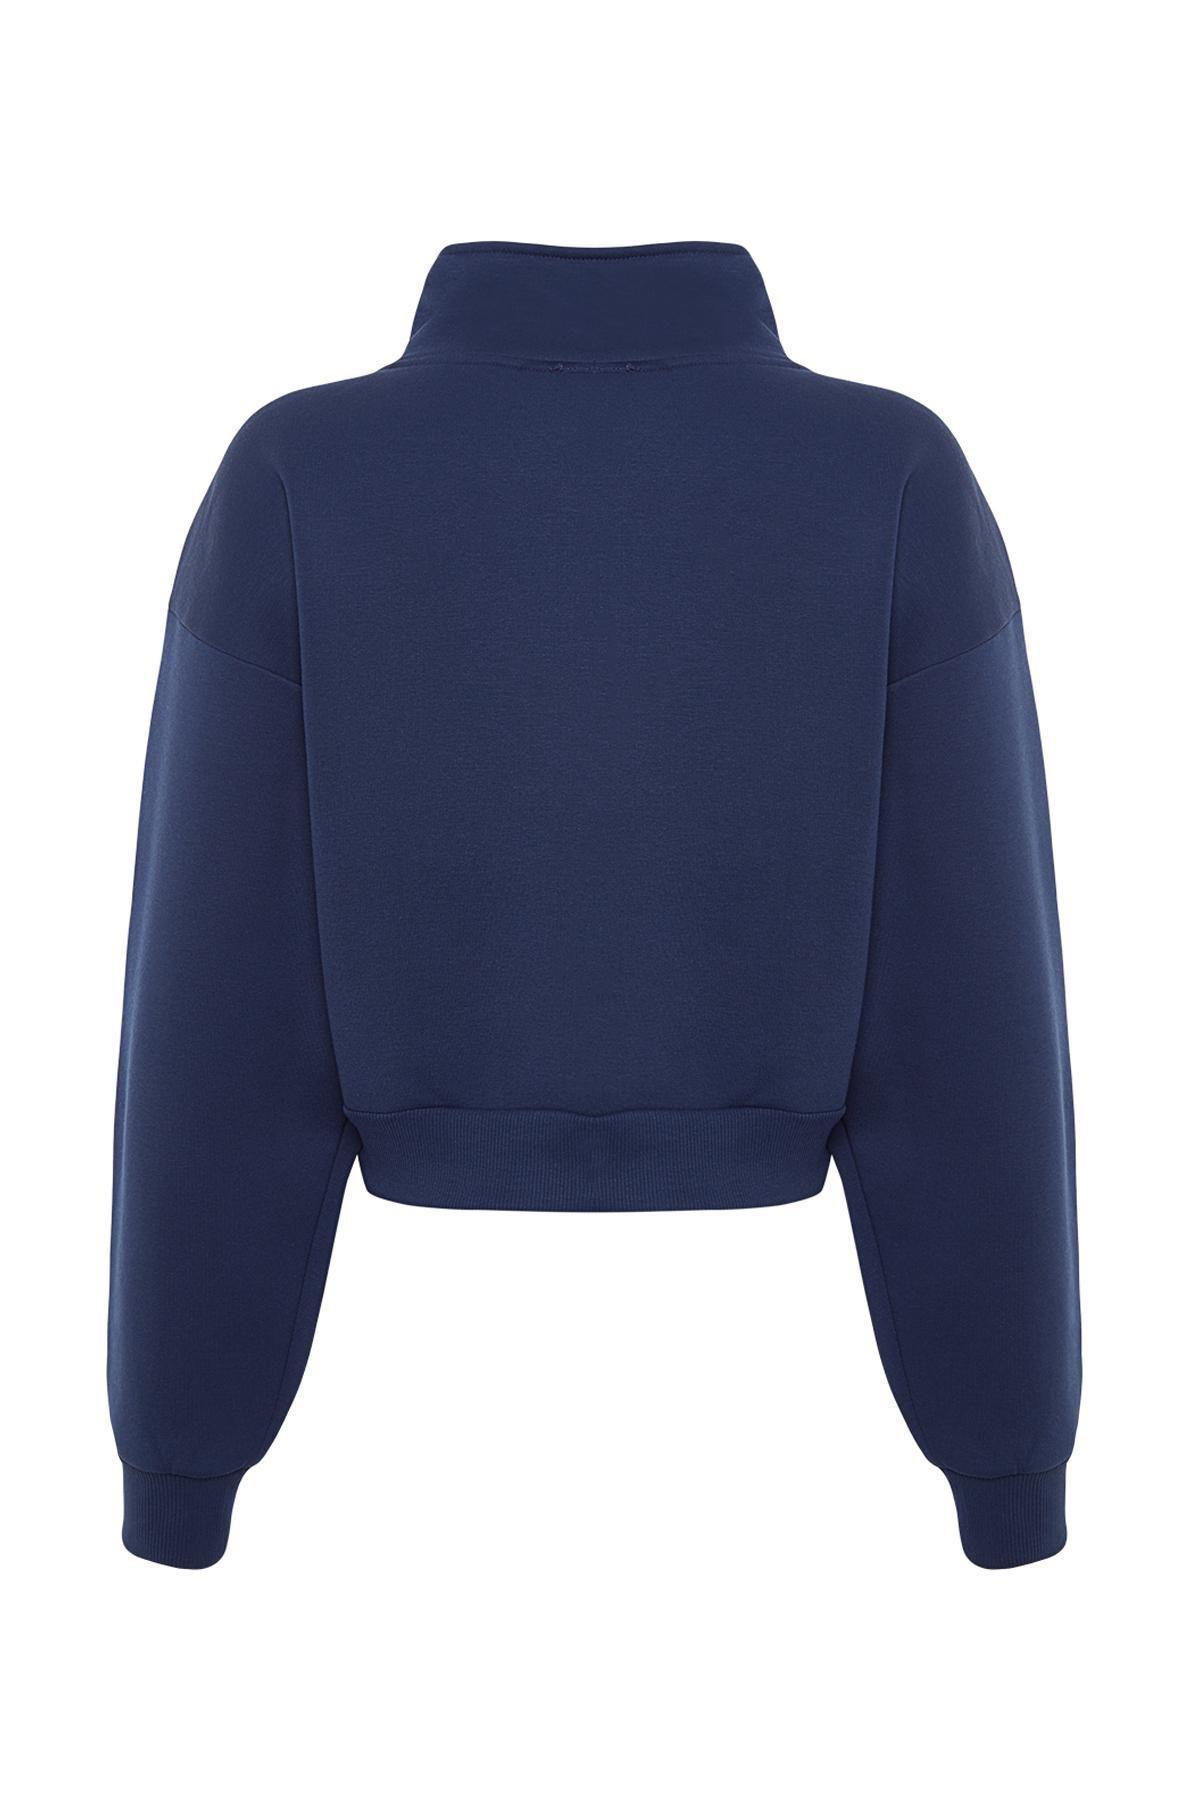 Trendyol - Navy Zippered Collar Knitted Sweatshirt